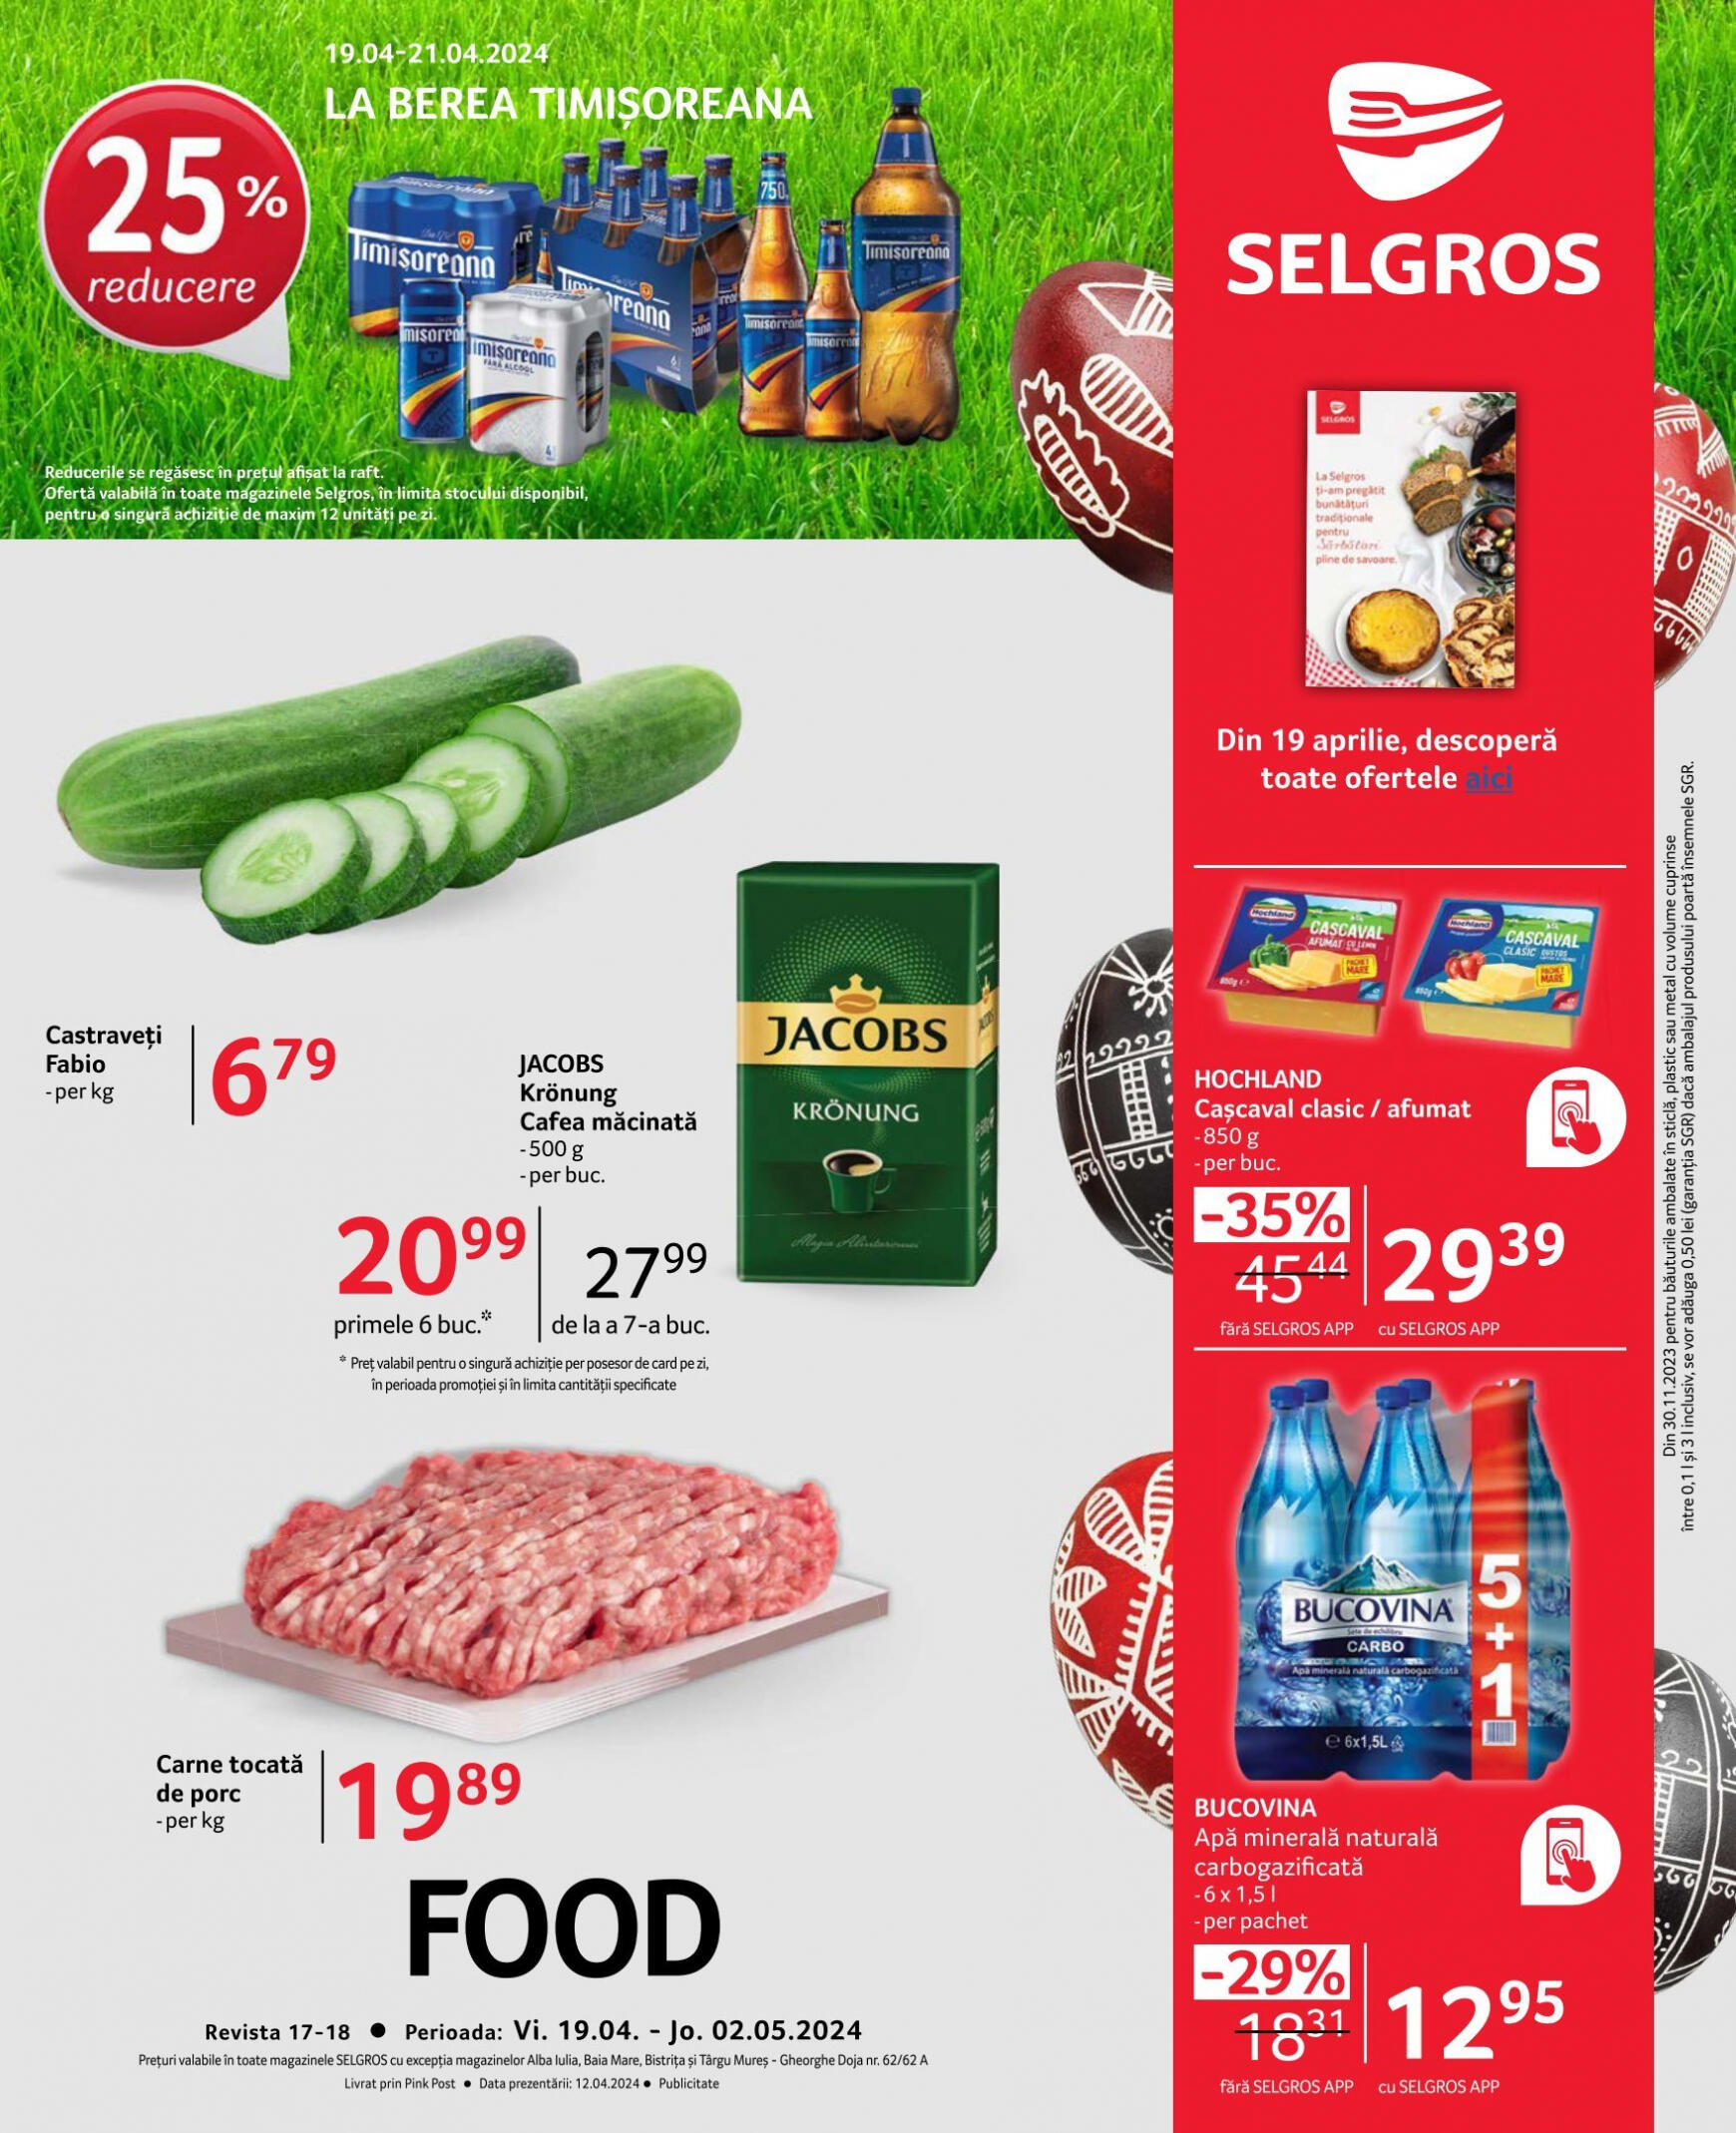 selgros - Catalog nou Selgros - Food 19.04. - 02.05.